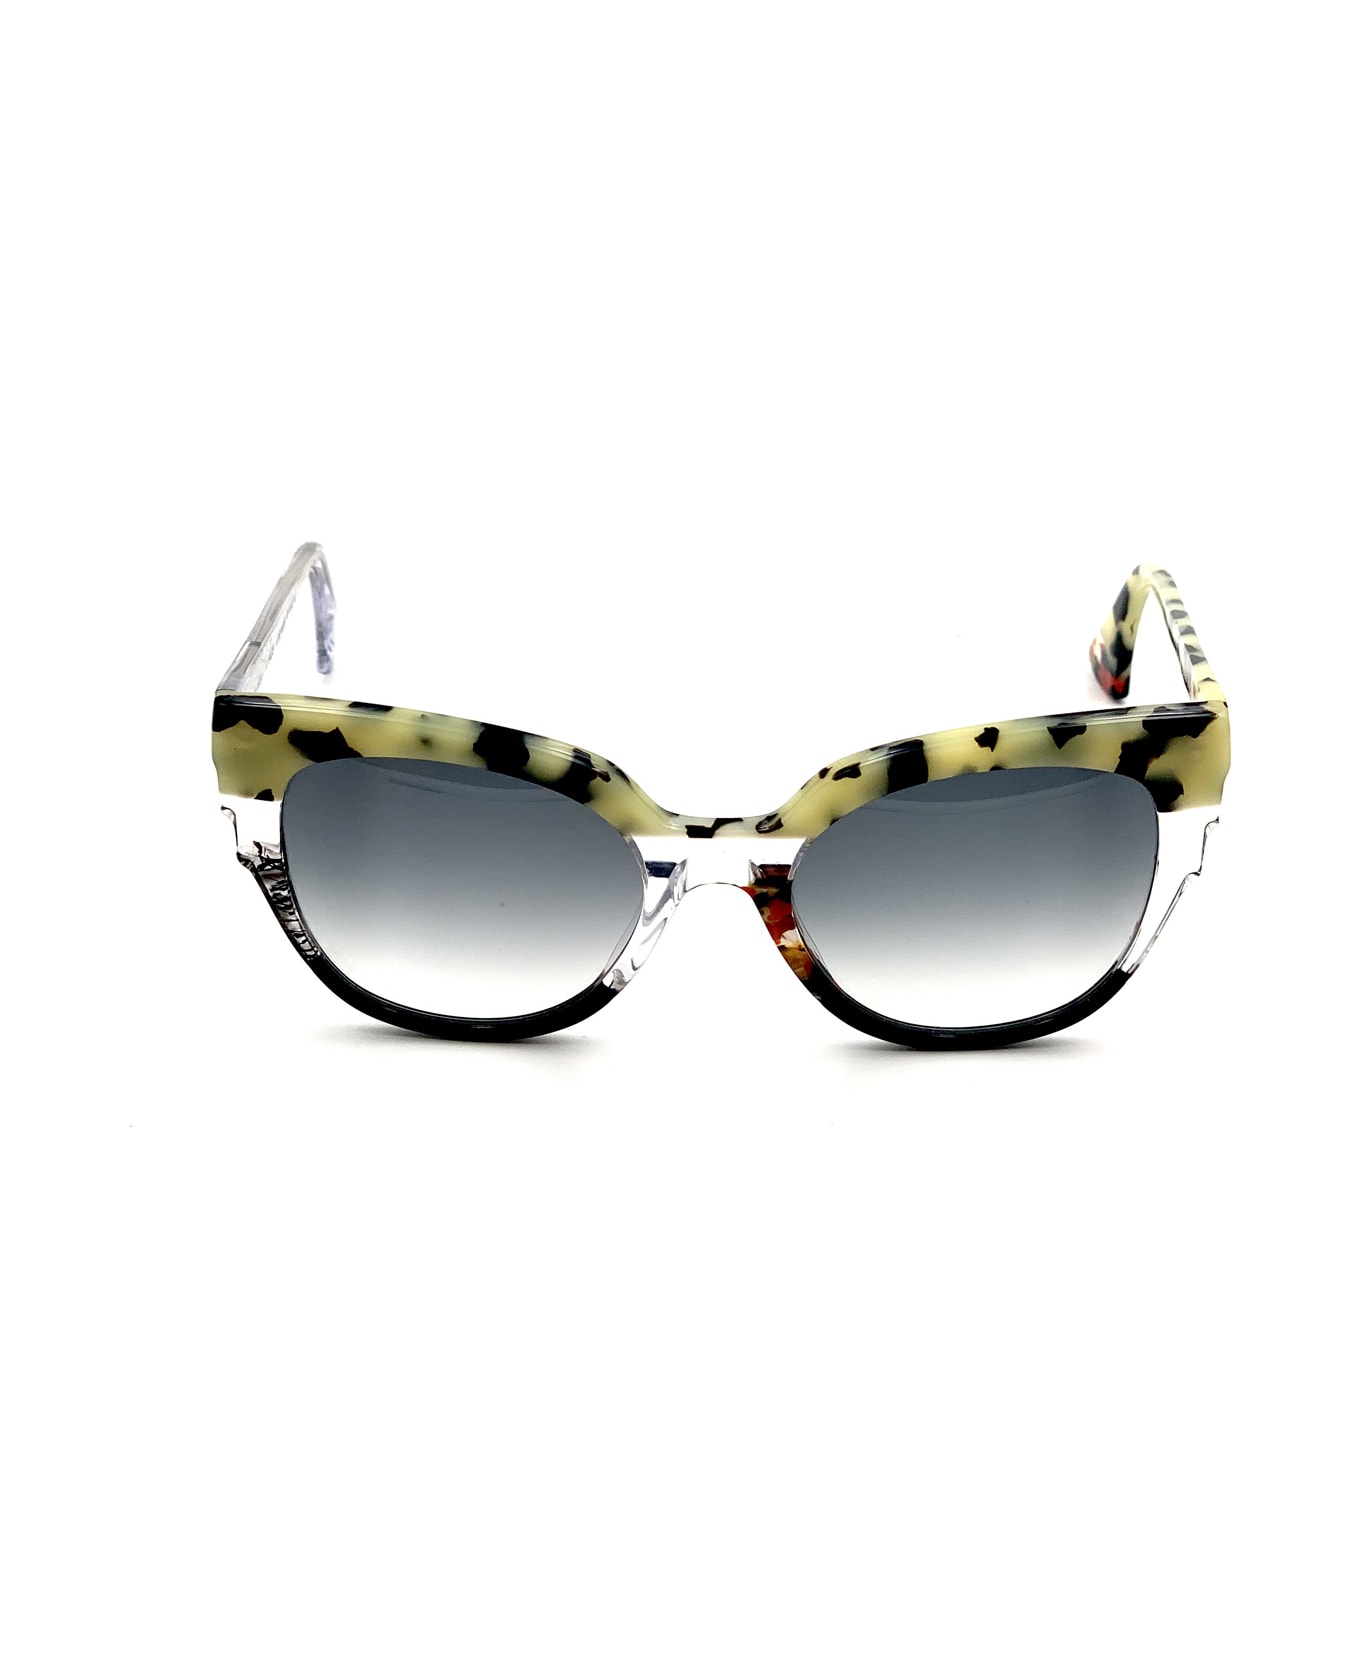 Silvian Heach Jumble 492 Sunglasses - Multicolore サングラス